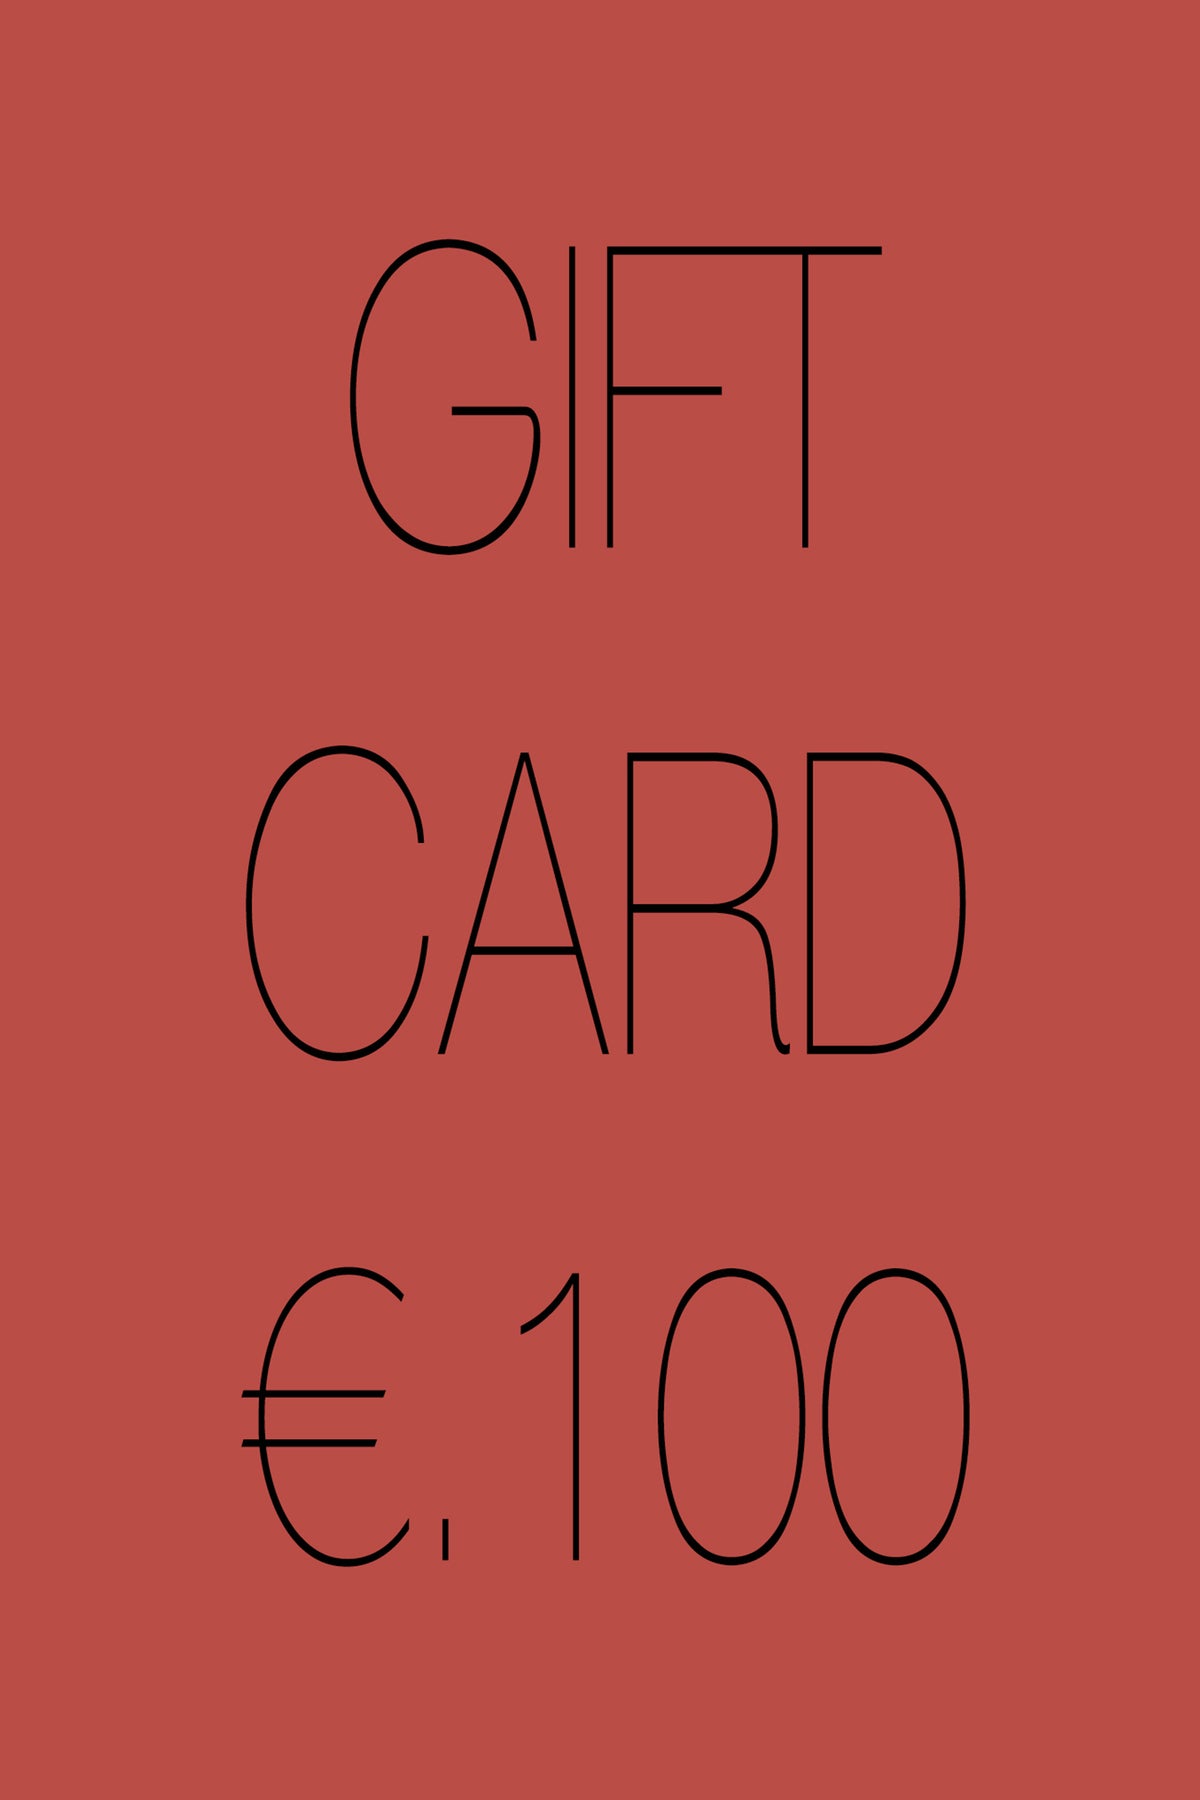 GIFT CARD €100.00